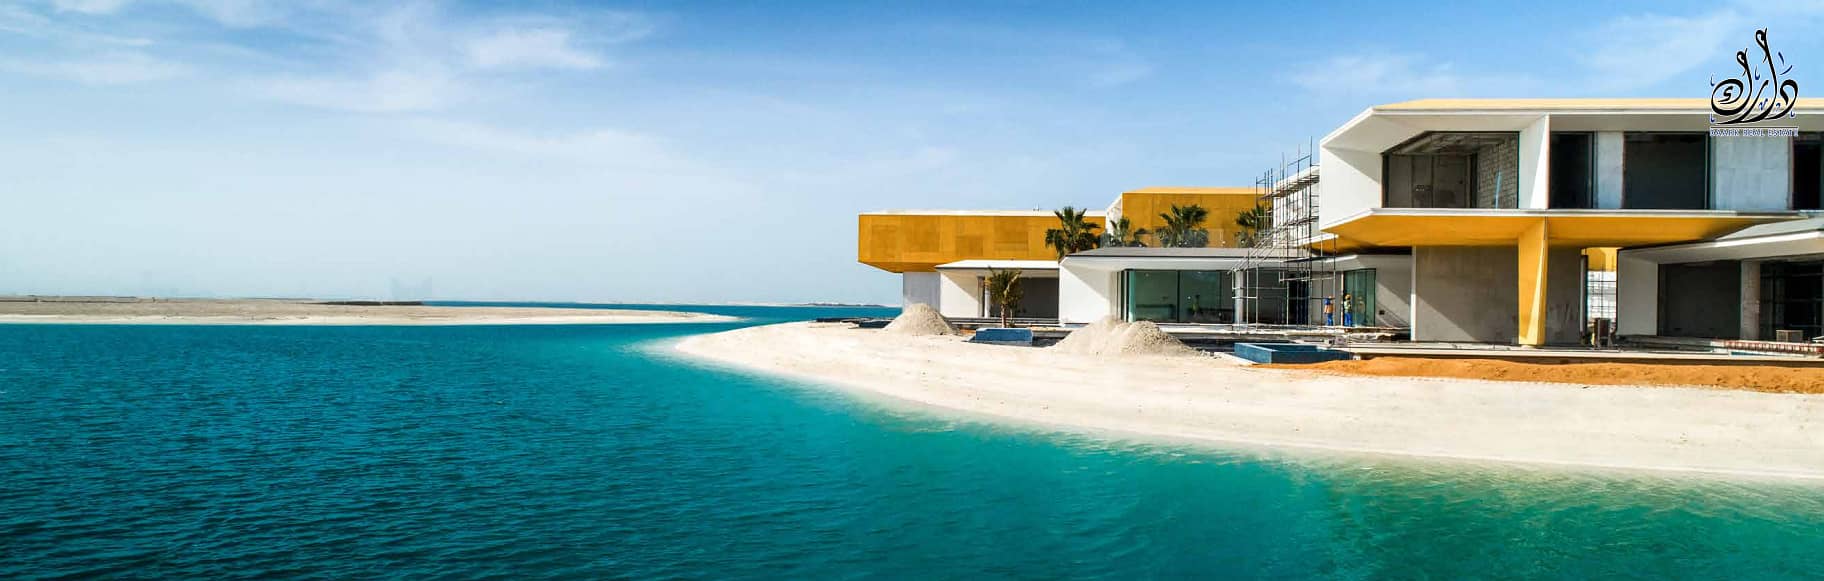 13 Luxurious Beach Villa |Ocean View | Last Villa Left | Private Beach Plot